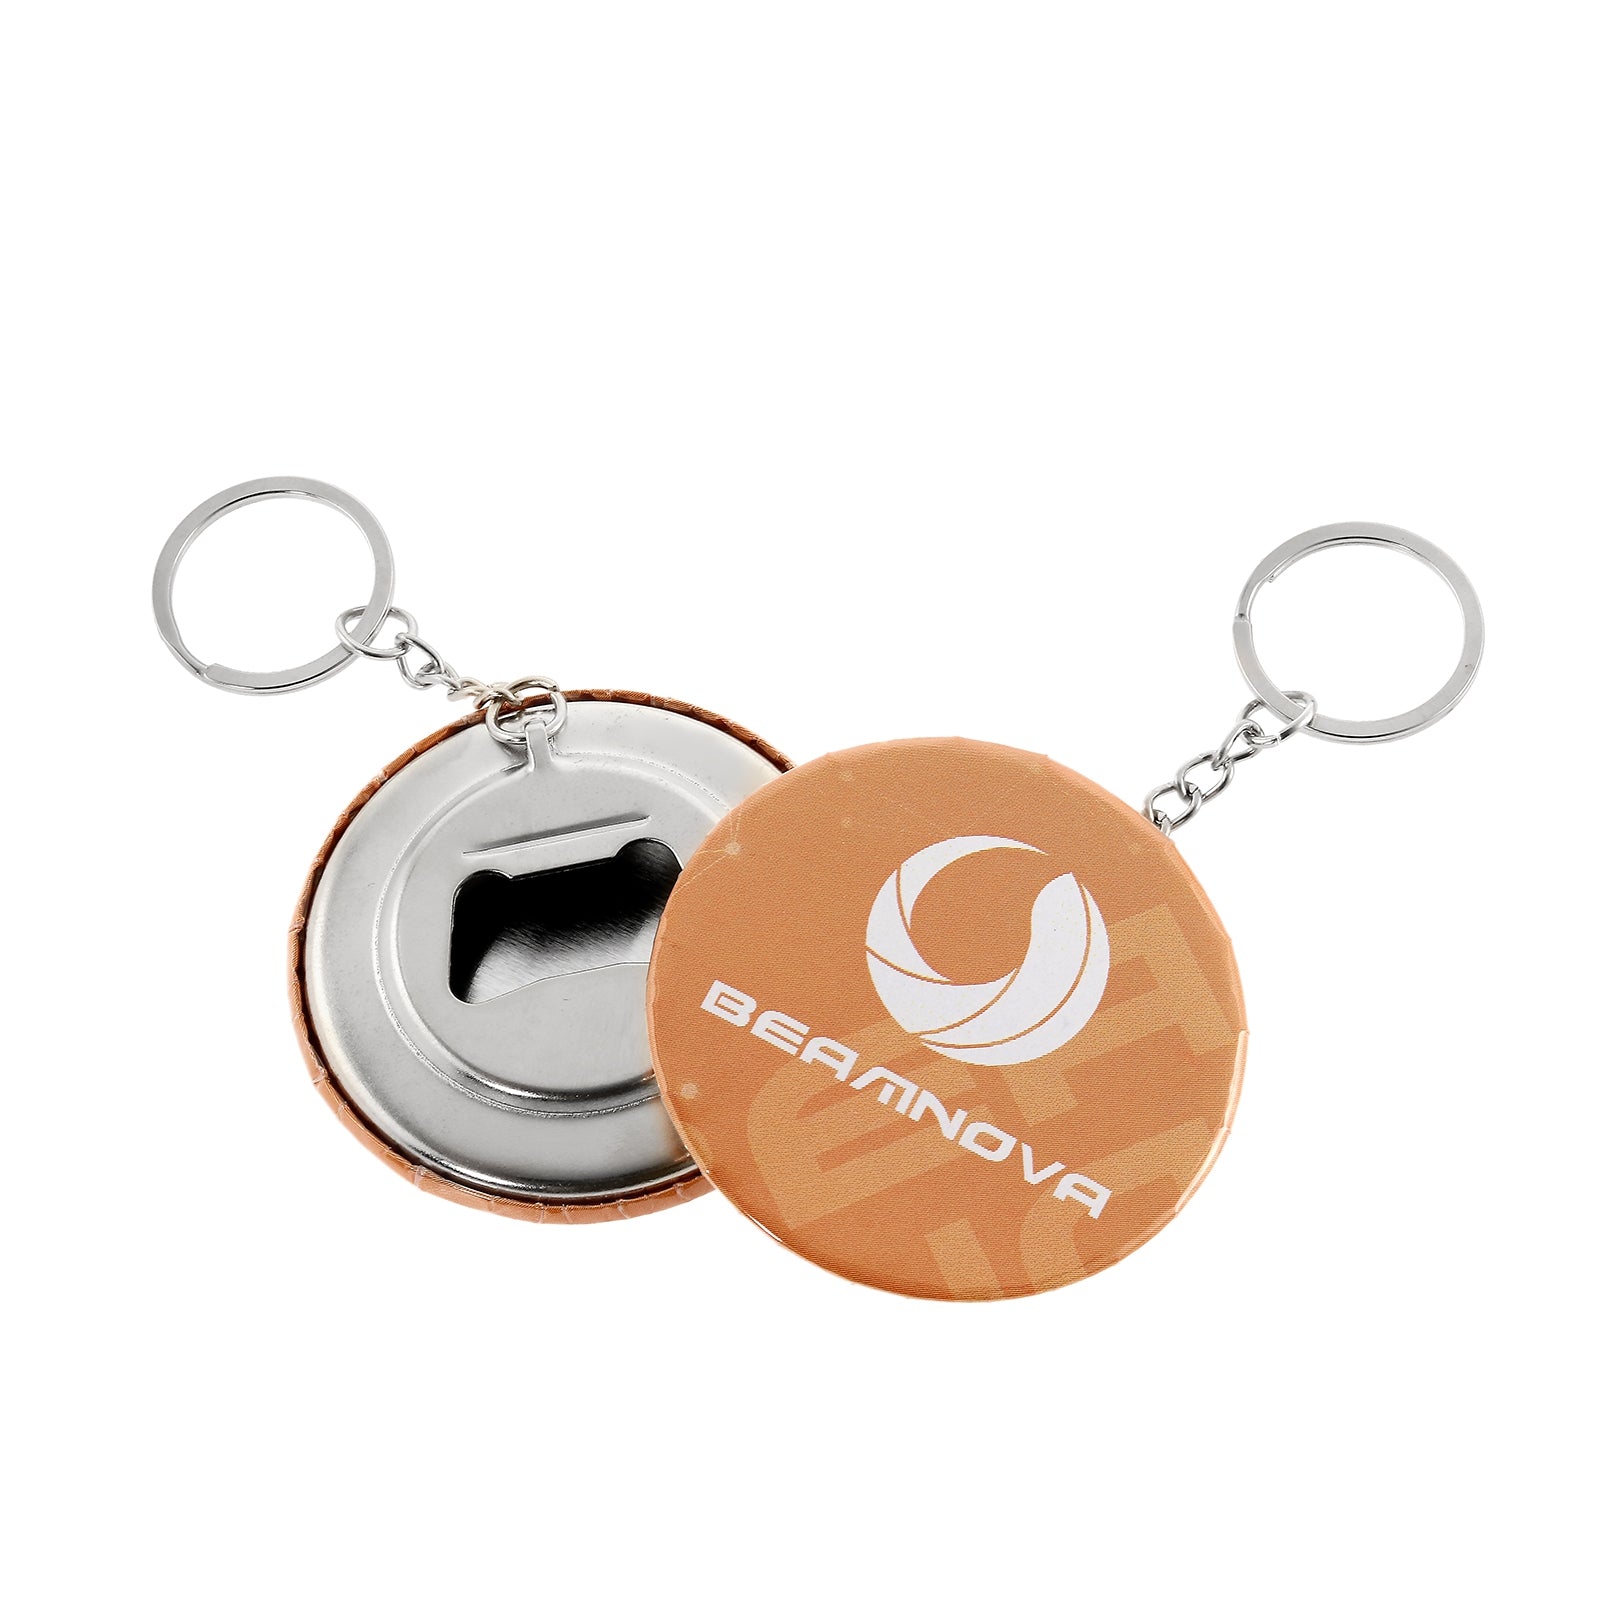 100 Set of Keychain Bottle Opener Metal Button Supplies Button